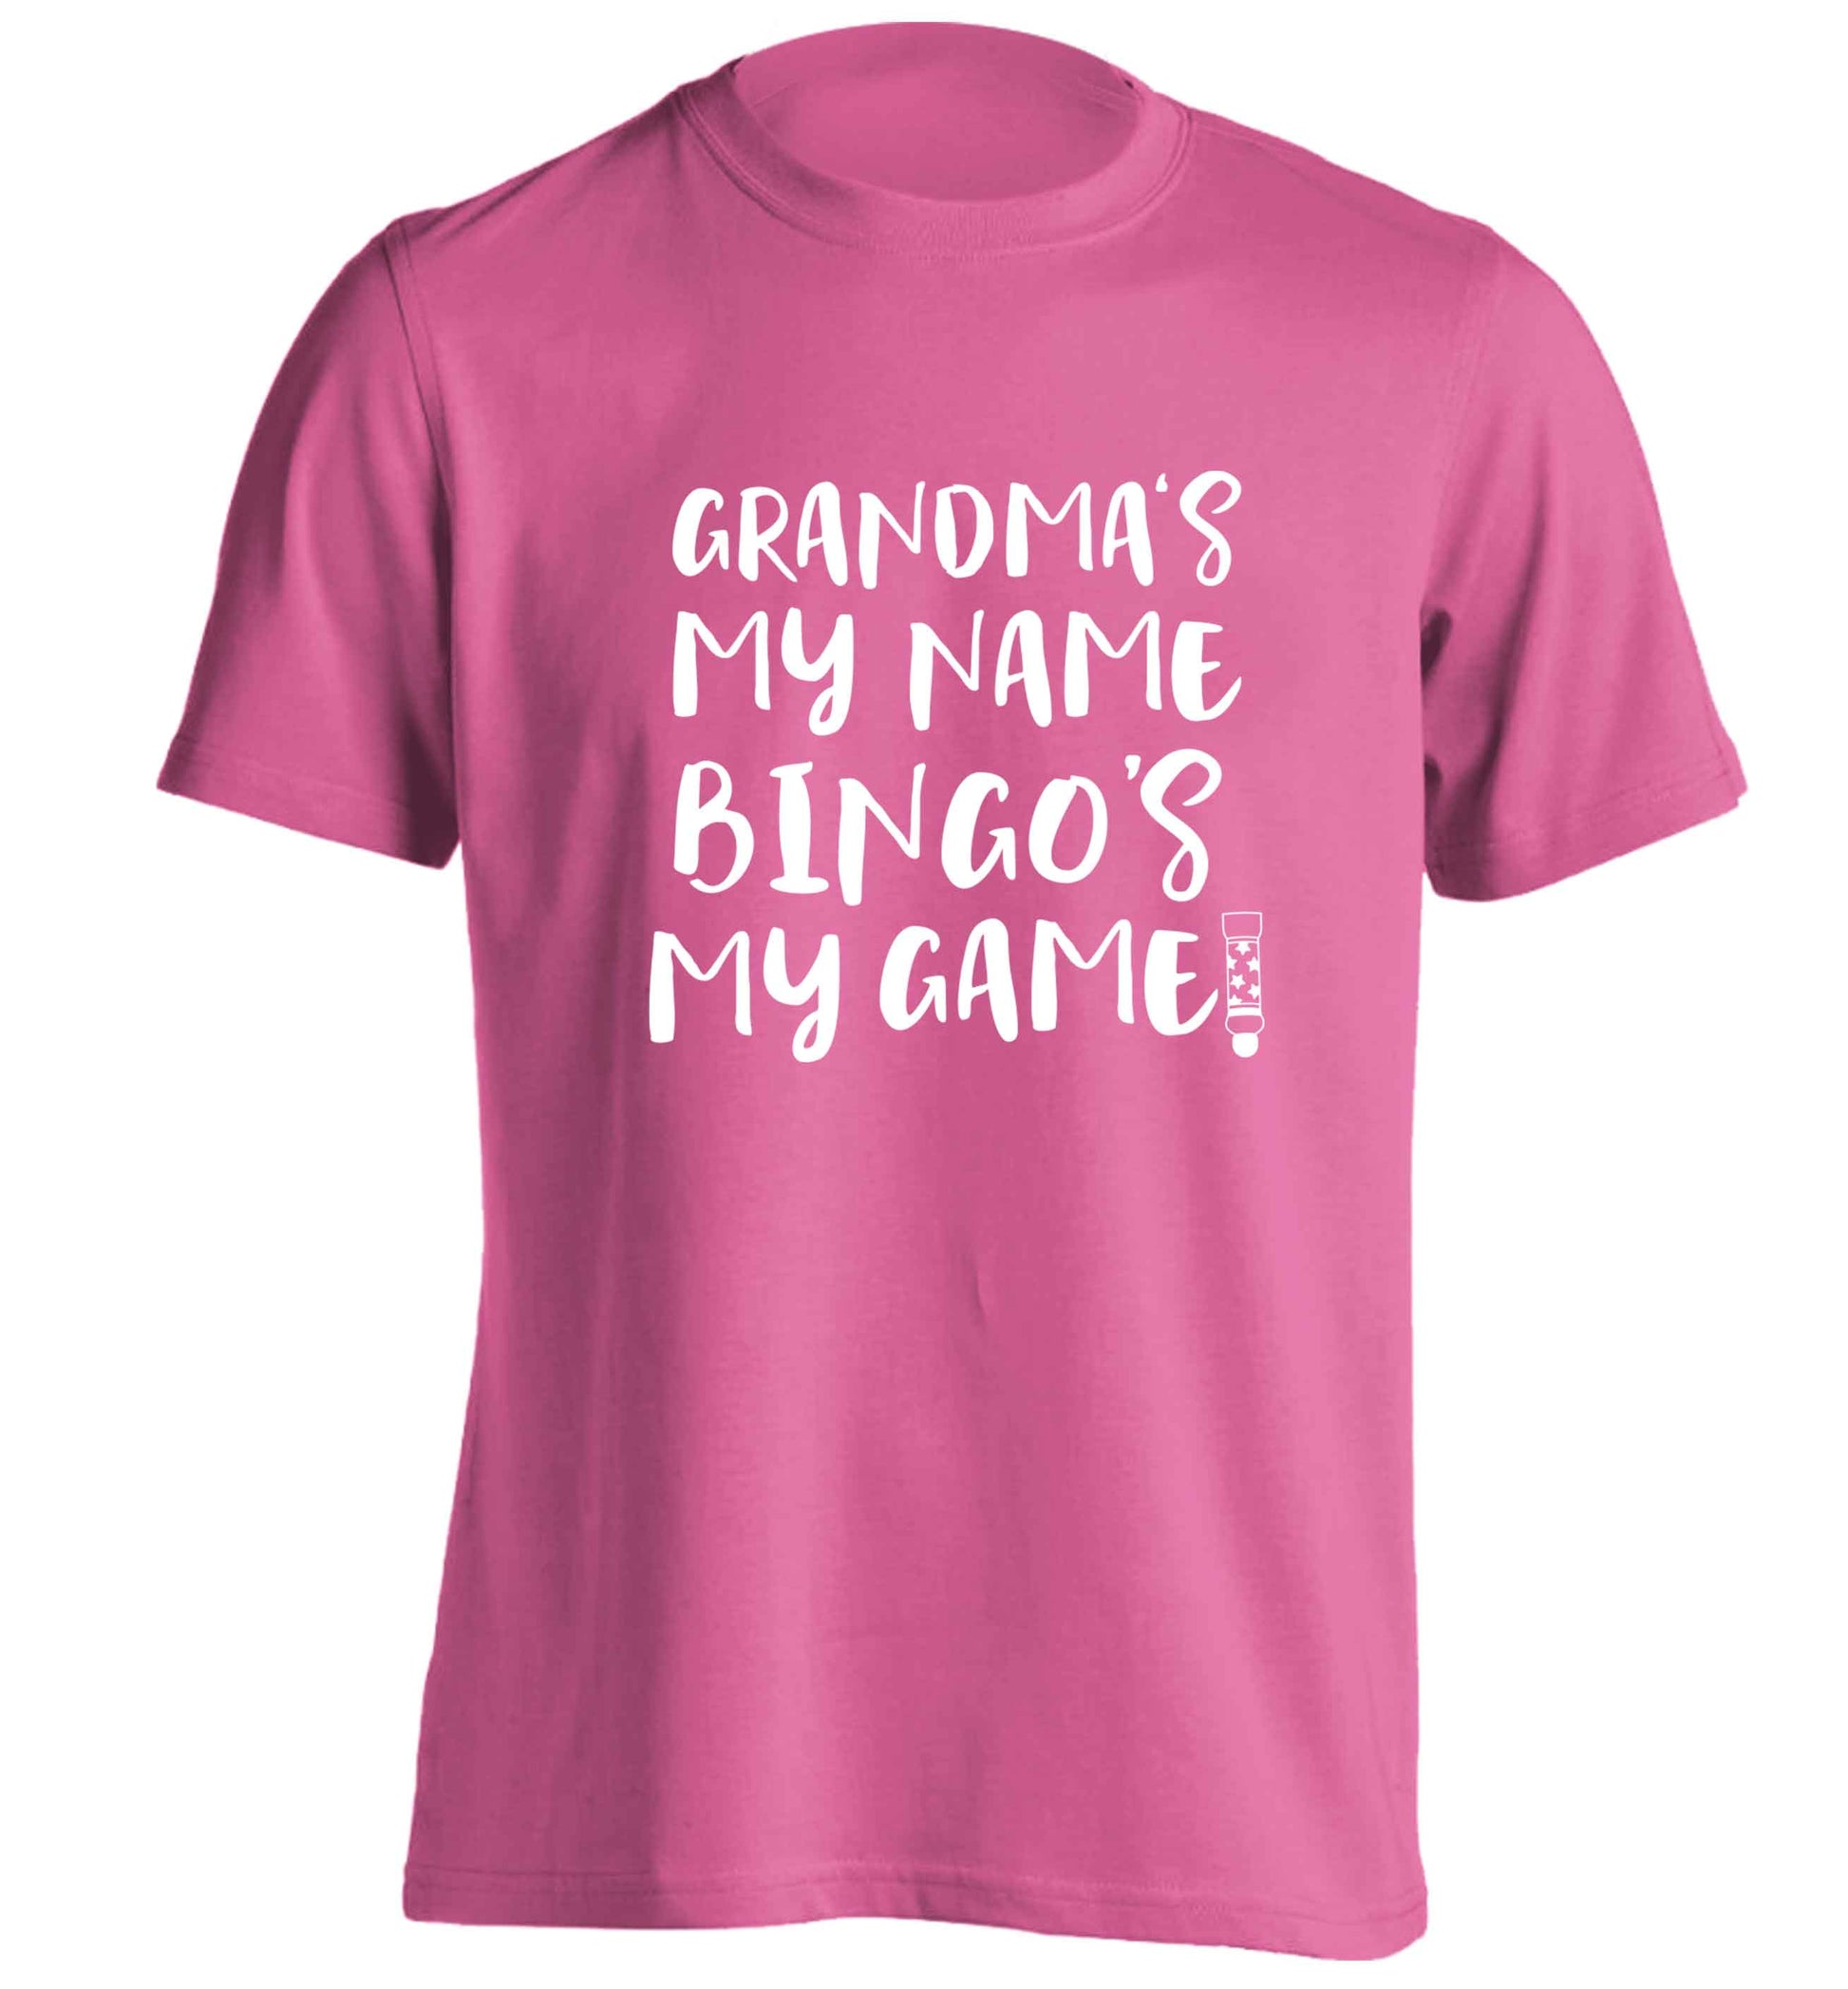 Grandma's my name bingo's my game! adults unisex pink Tshirt 2XL